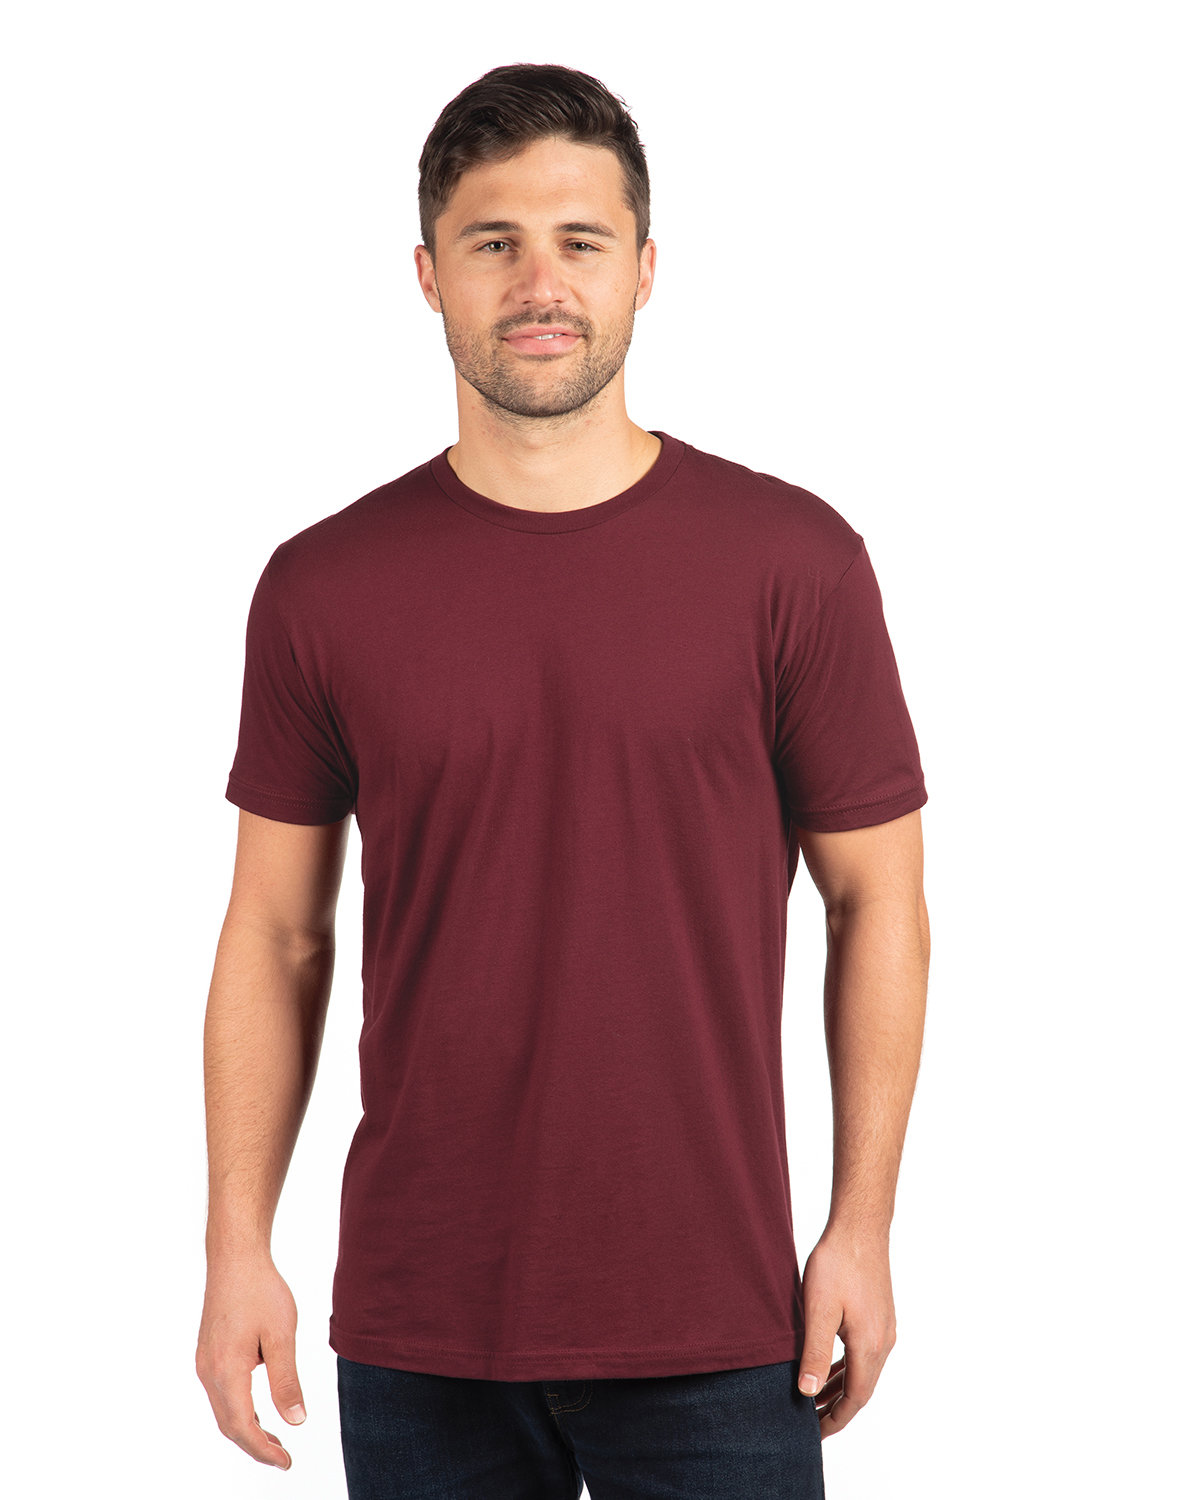 Next Level Apparel Unisex Cotton T-Shirt MAROON 